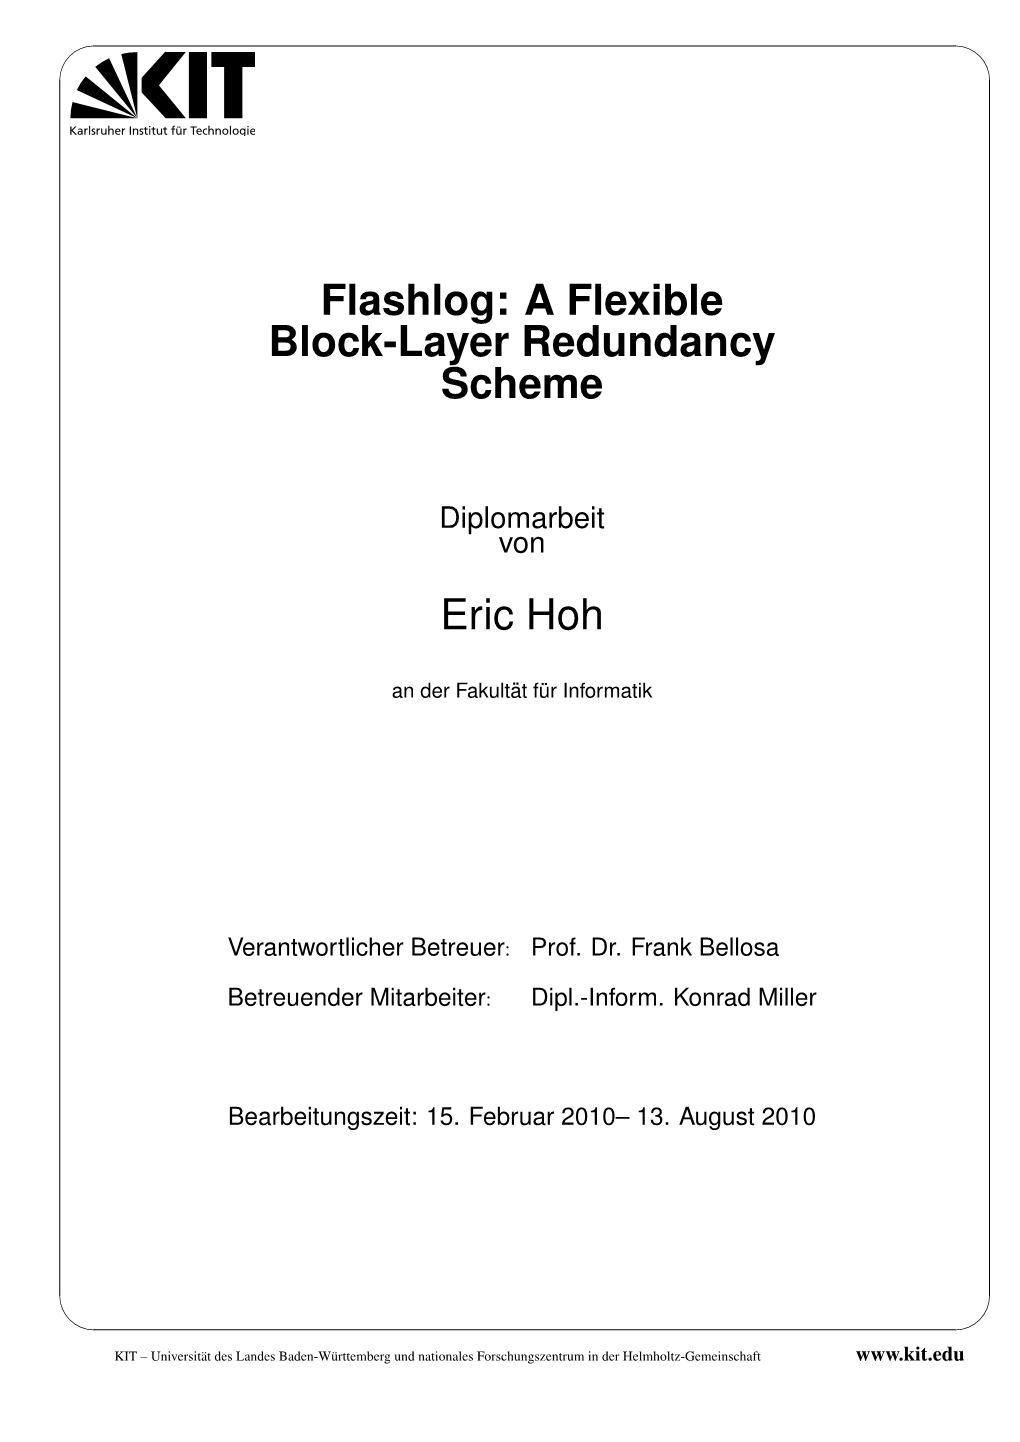 Flashlog: a Flexible Block-Layer Redundancy Scheme